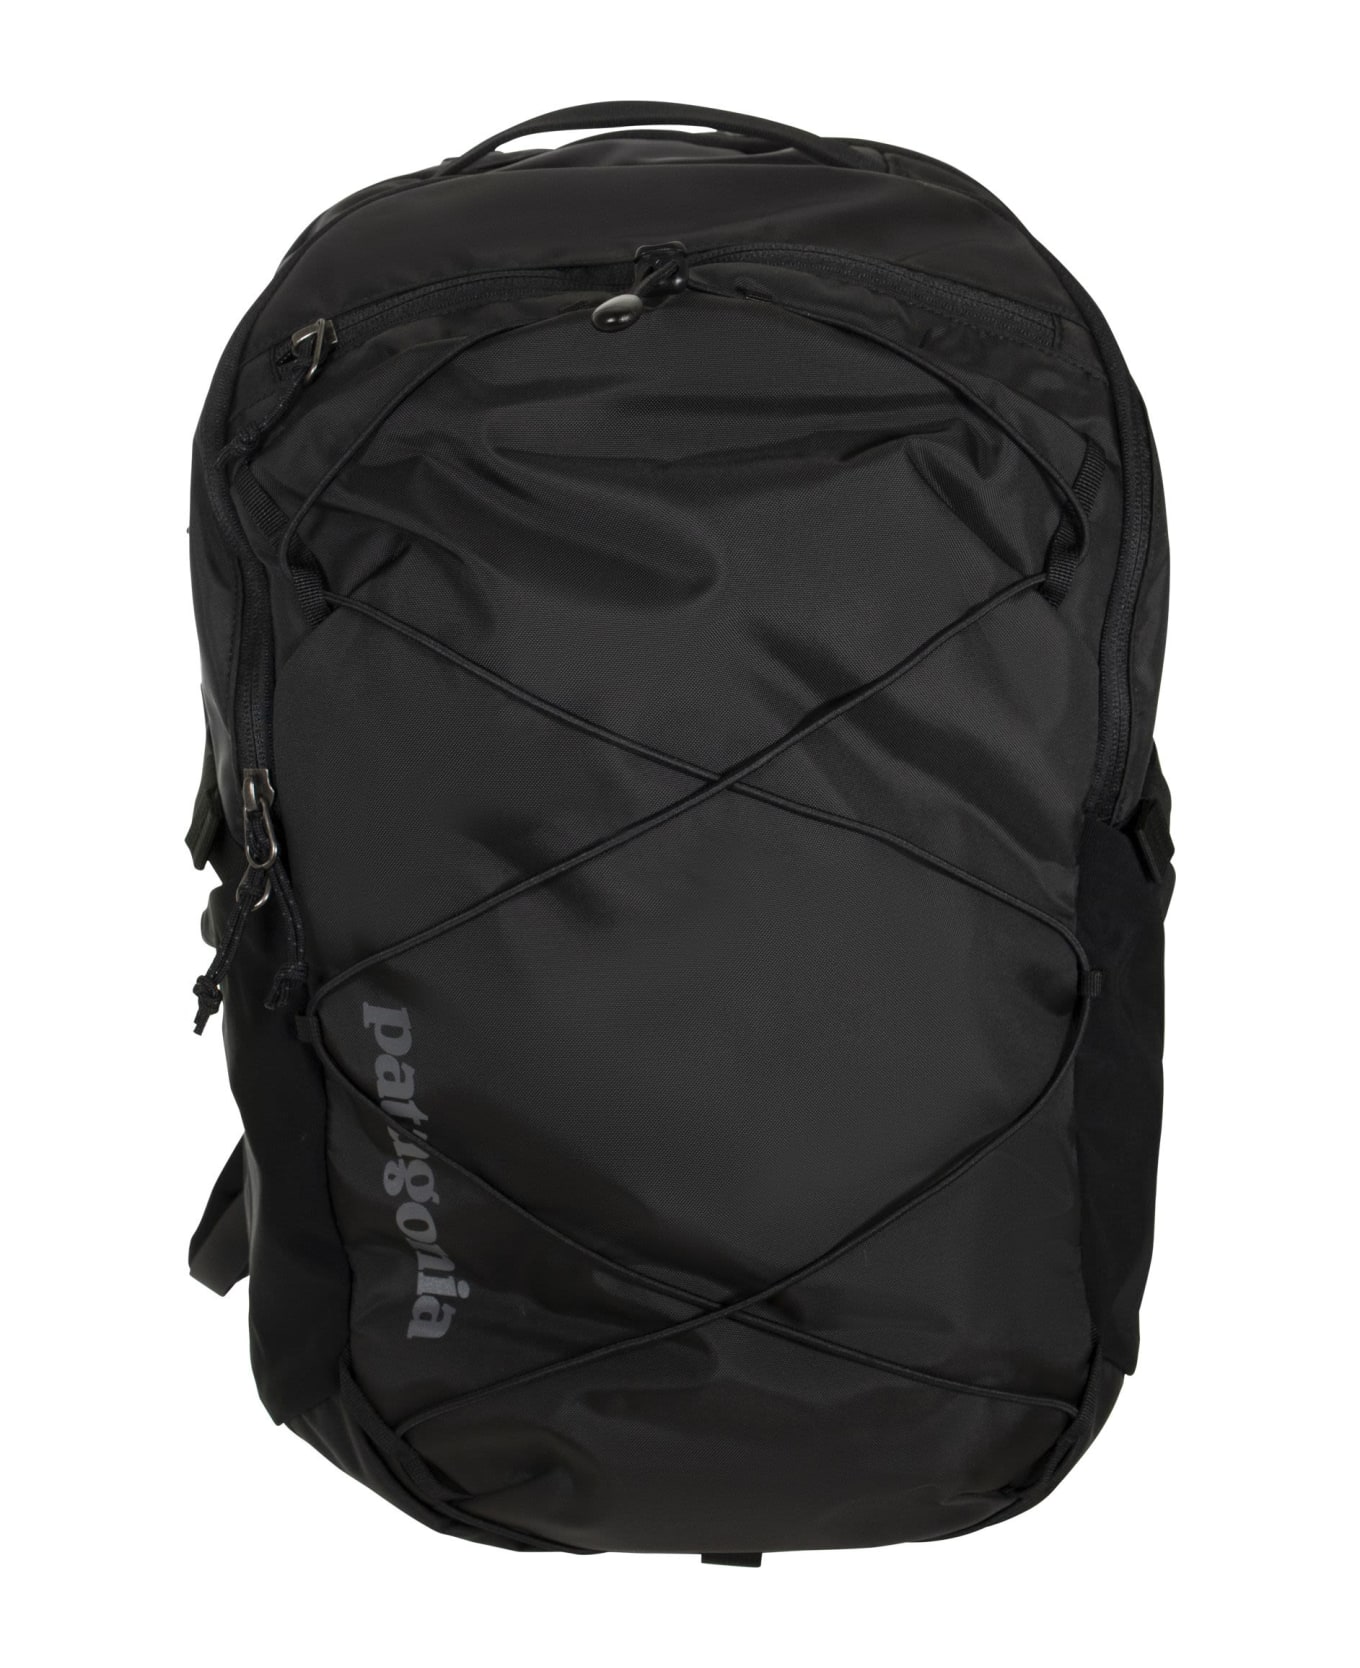 Patagonia Refugio Day Pack - Backpack - Black